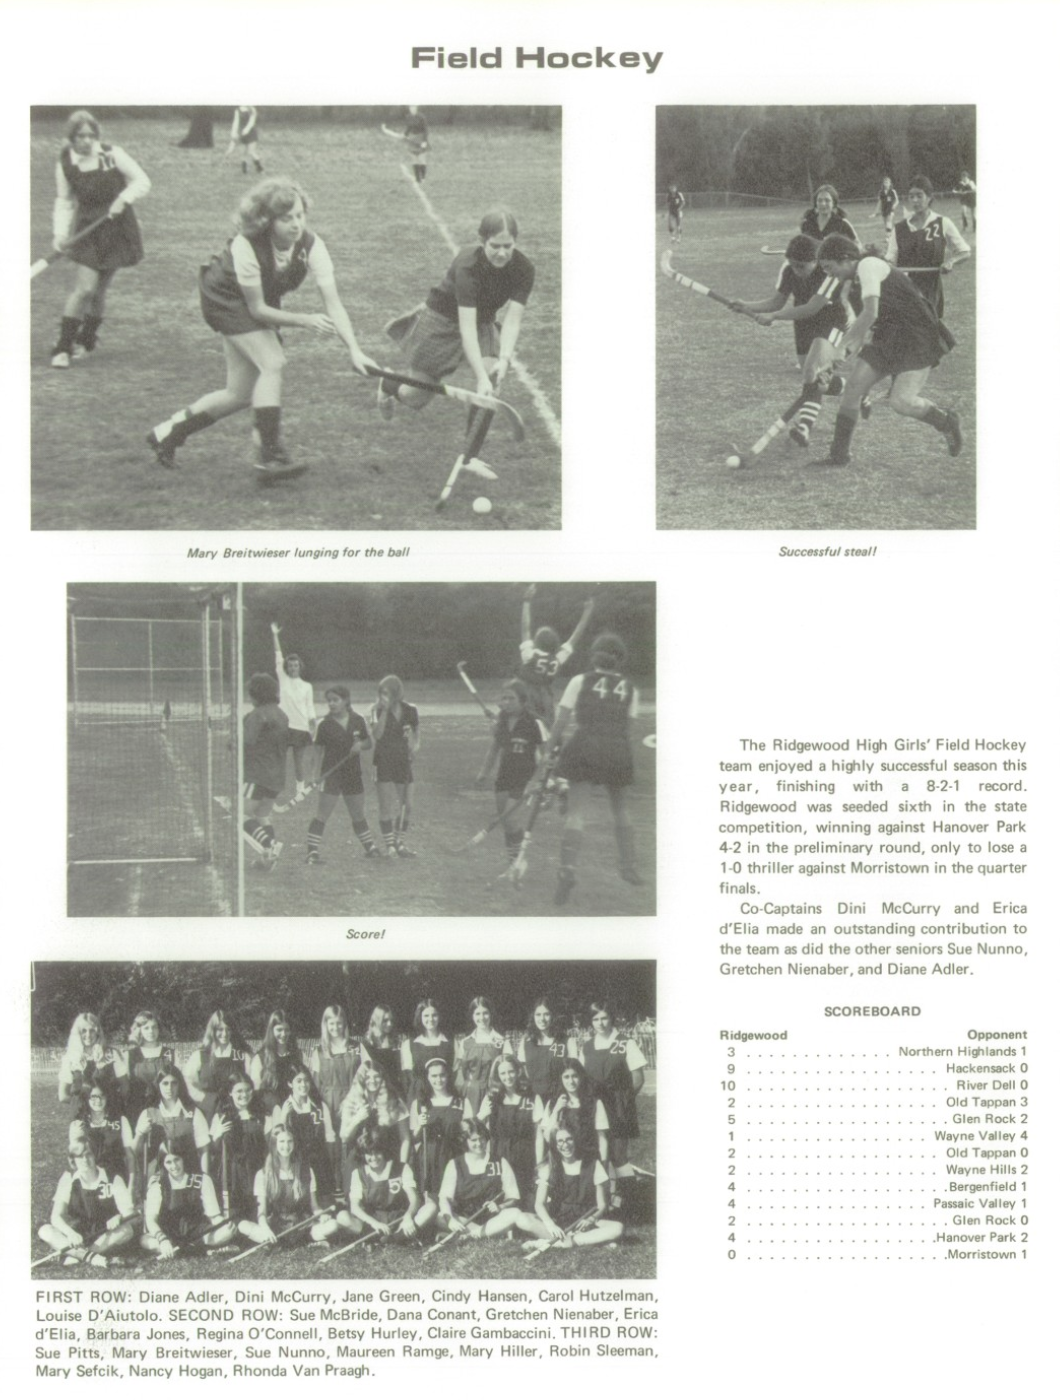 1973 Girls’ Field Hockey Team